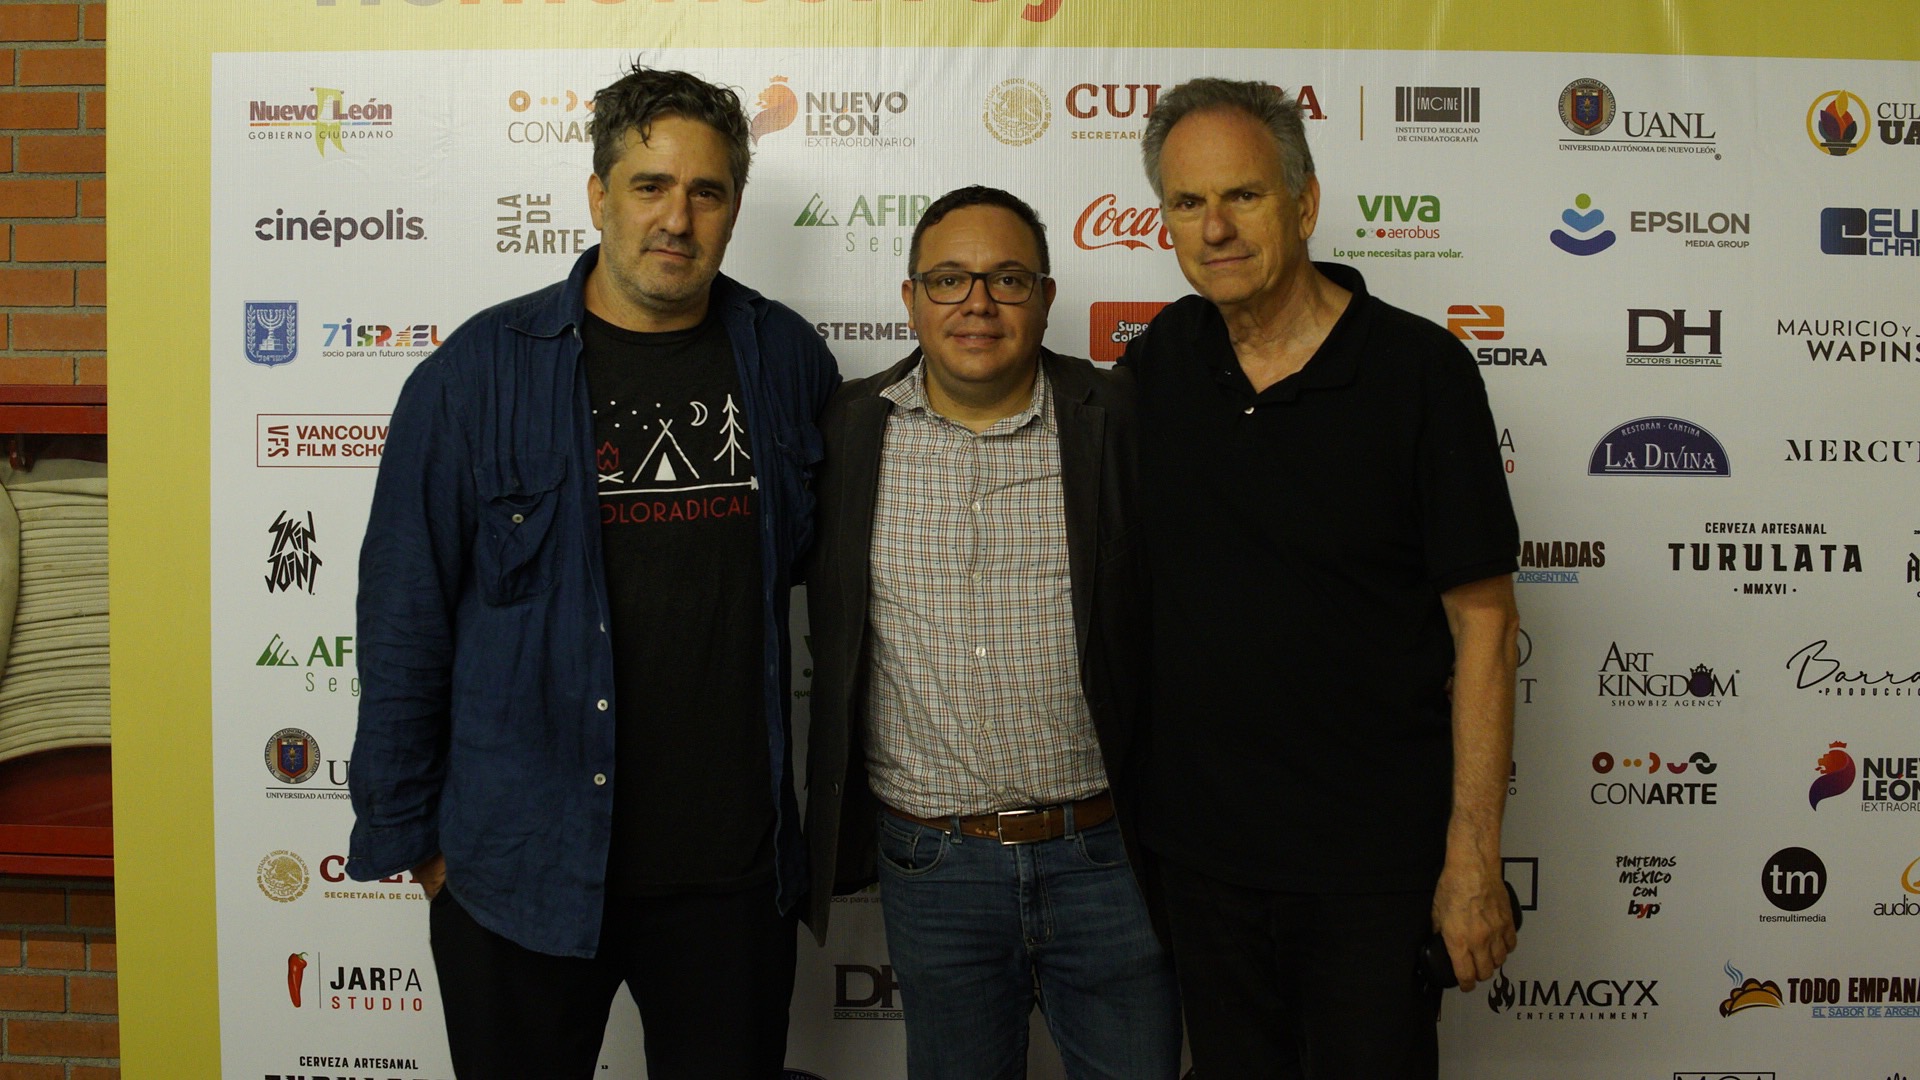 Monterrey International Film Festival welcome and honored Israeli filmmakers